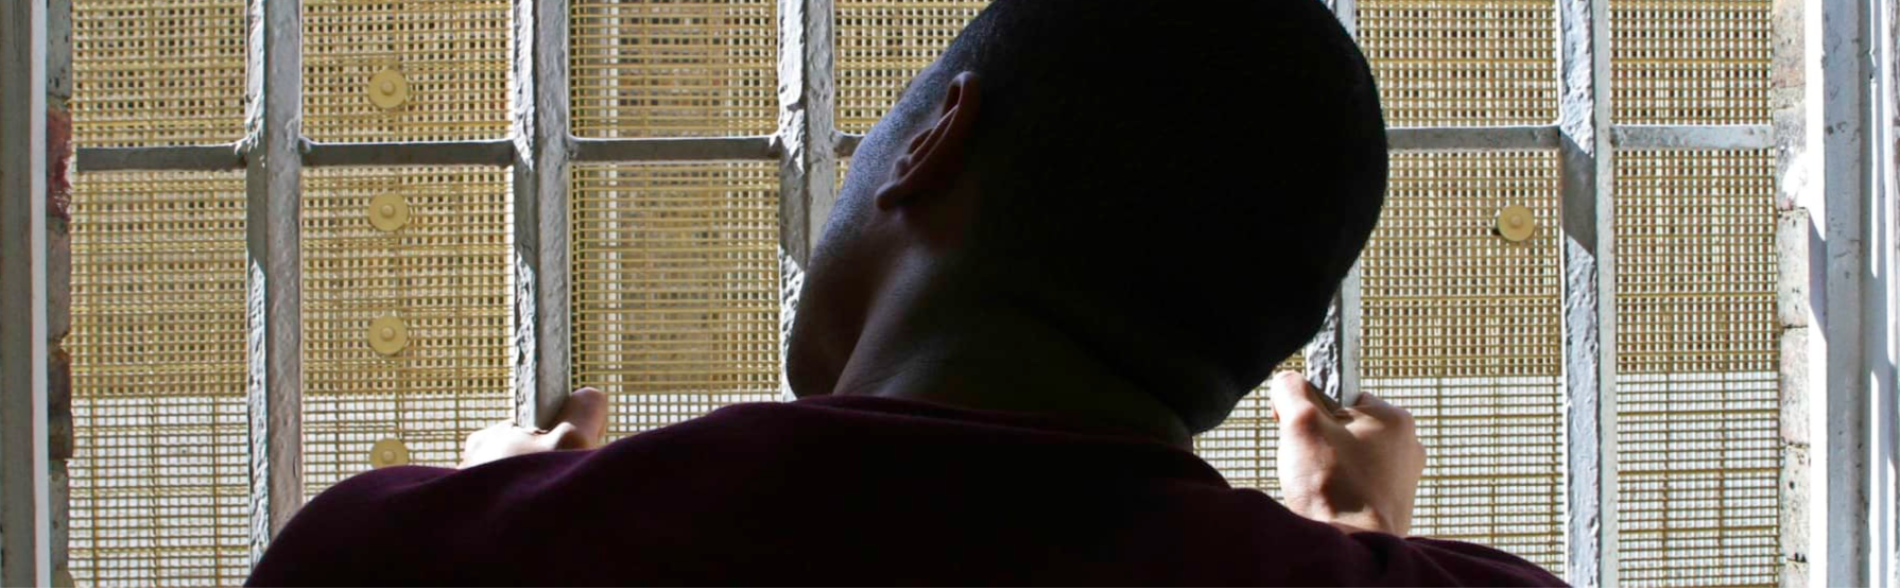 Mental Health in Prisons